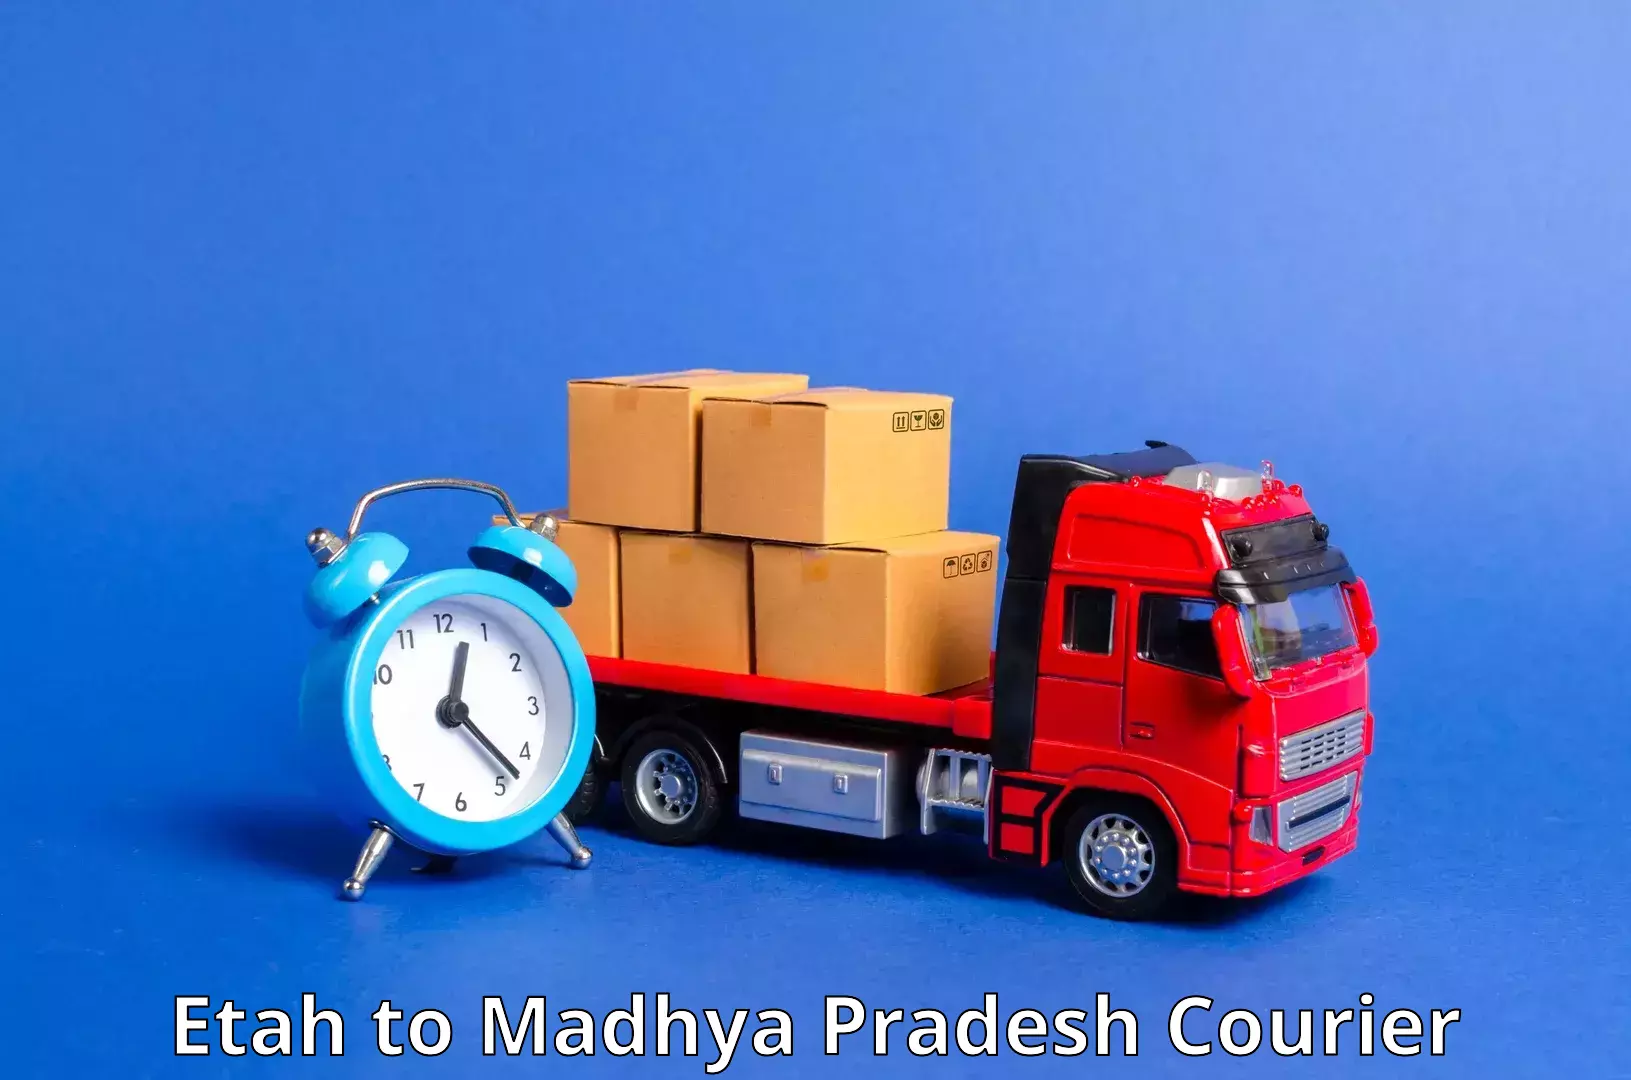 Specialized shipment handling Etah to Pachore